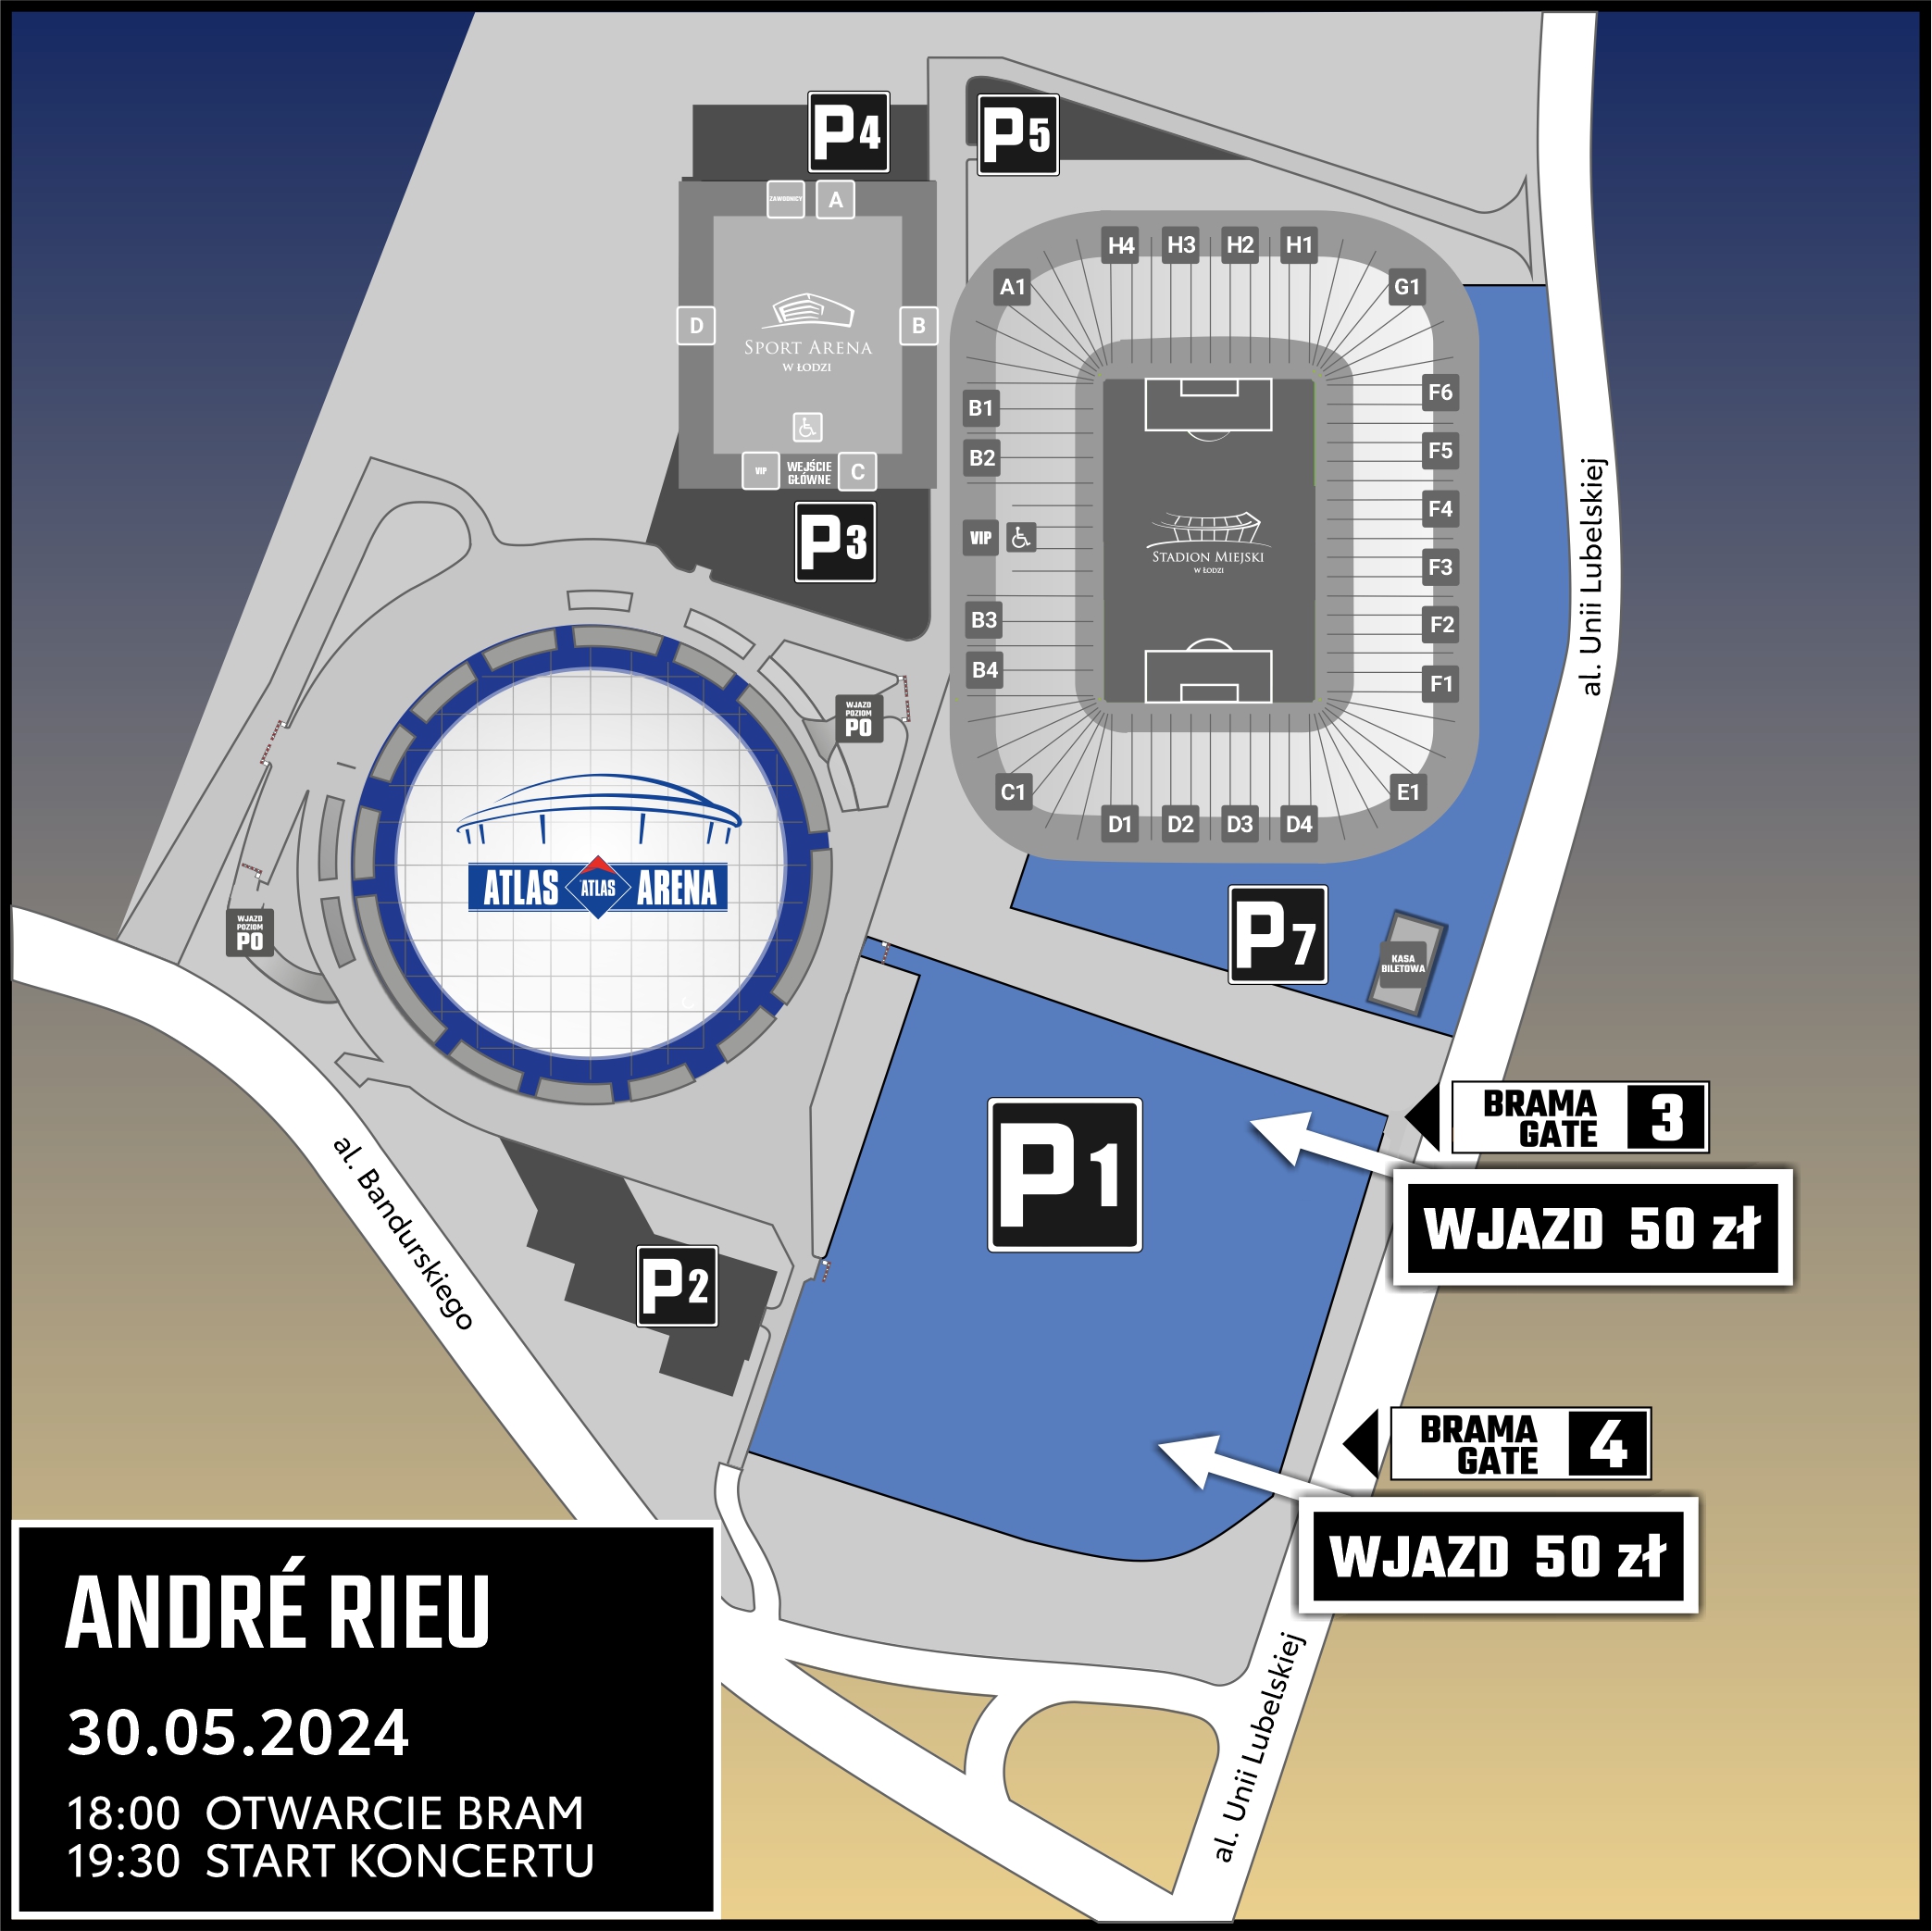 Andre Rieu parking